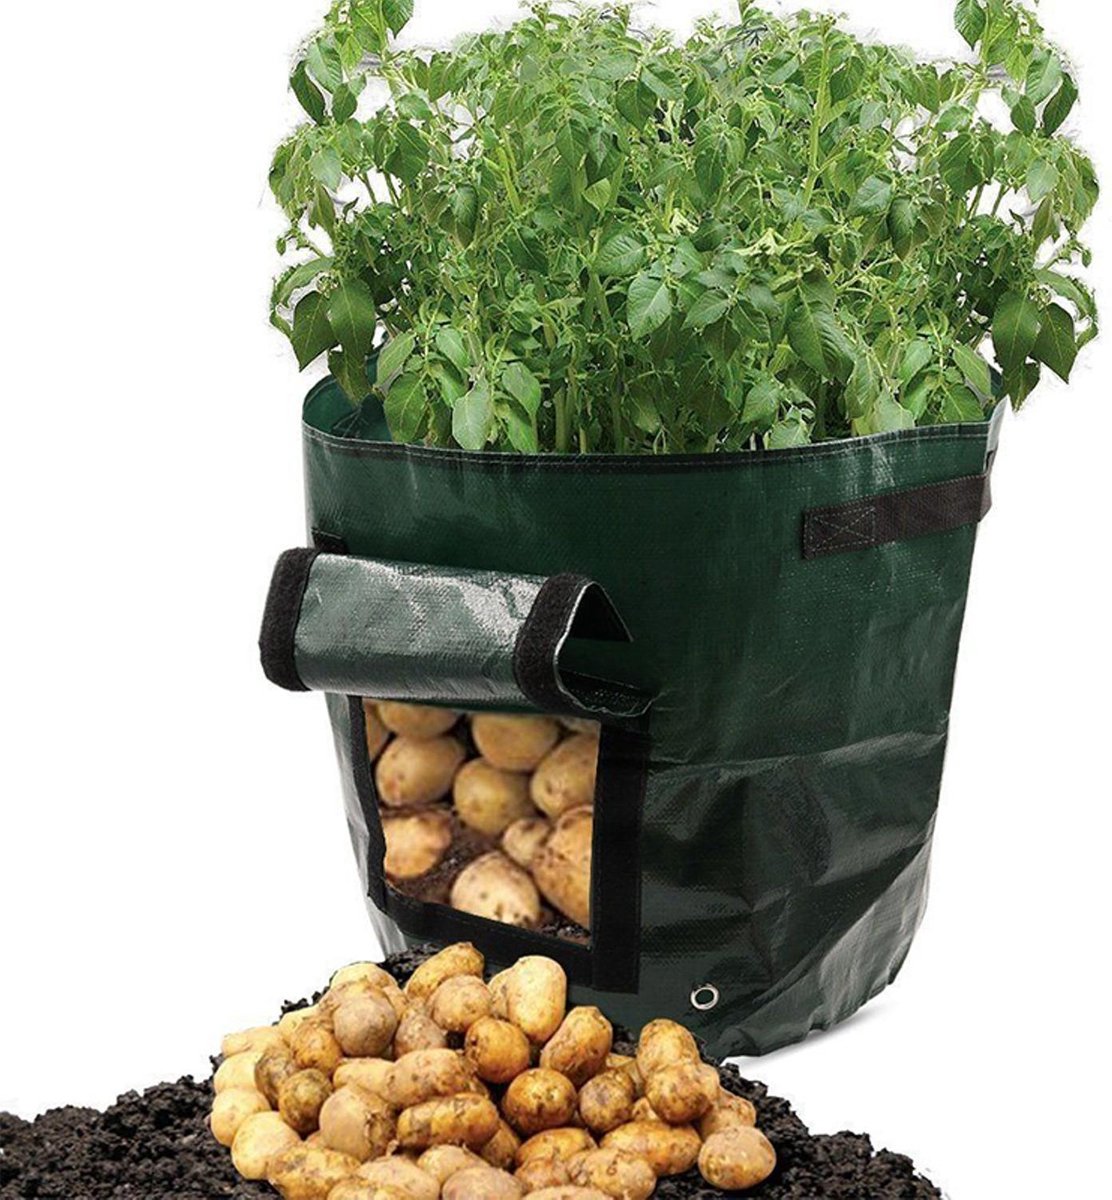 Pomme de terre Grow JARDINIERE PE tissu Plantation Récipient Sac légumes jardinage Sac C#P5 